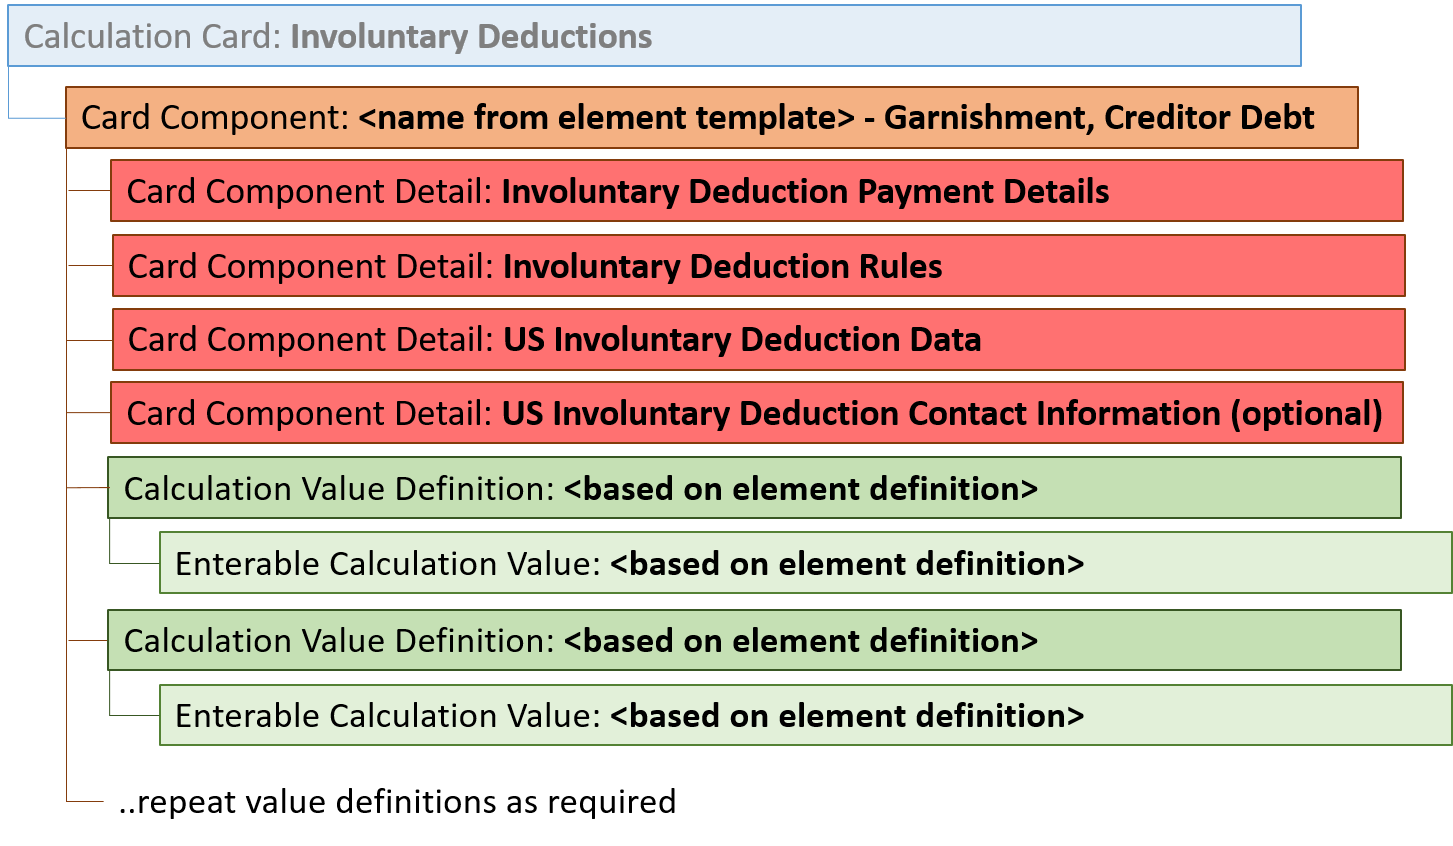 Garnishment and Creditor Debt Involuntary Deduction Hierarchy